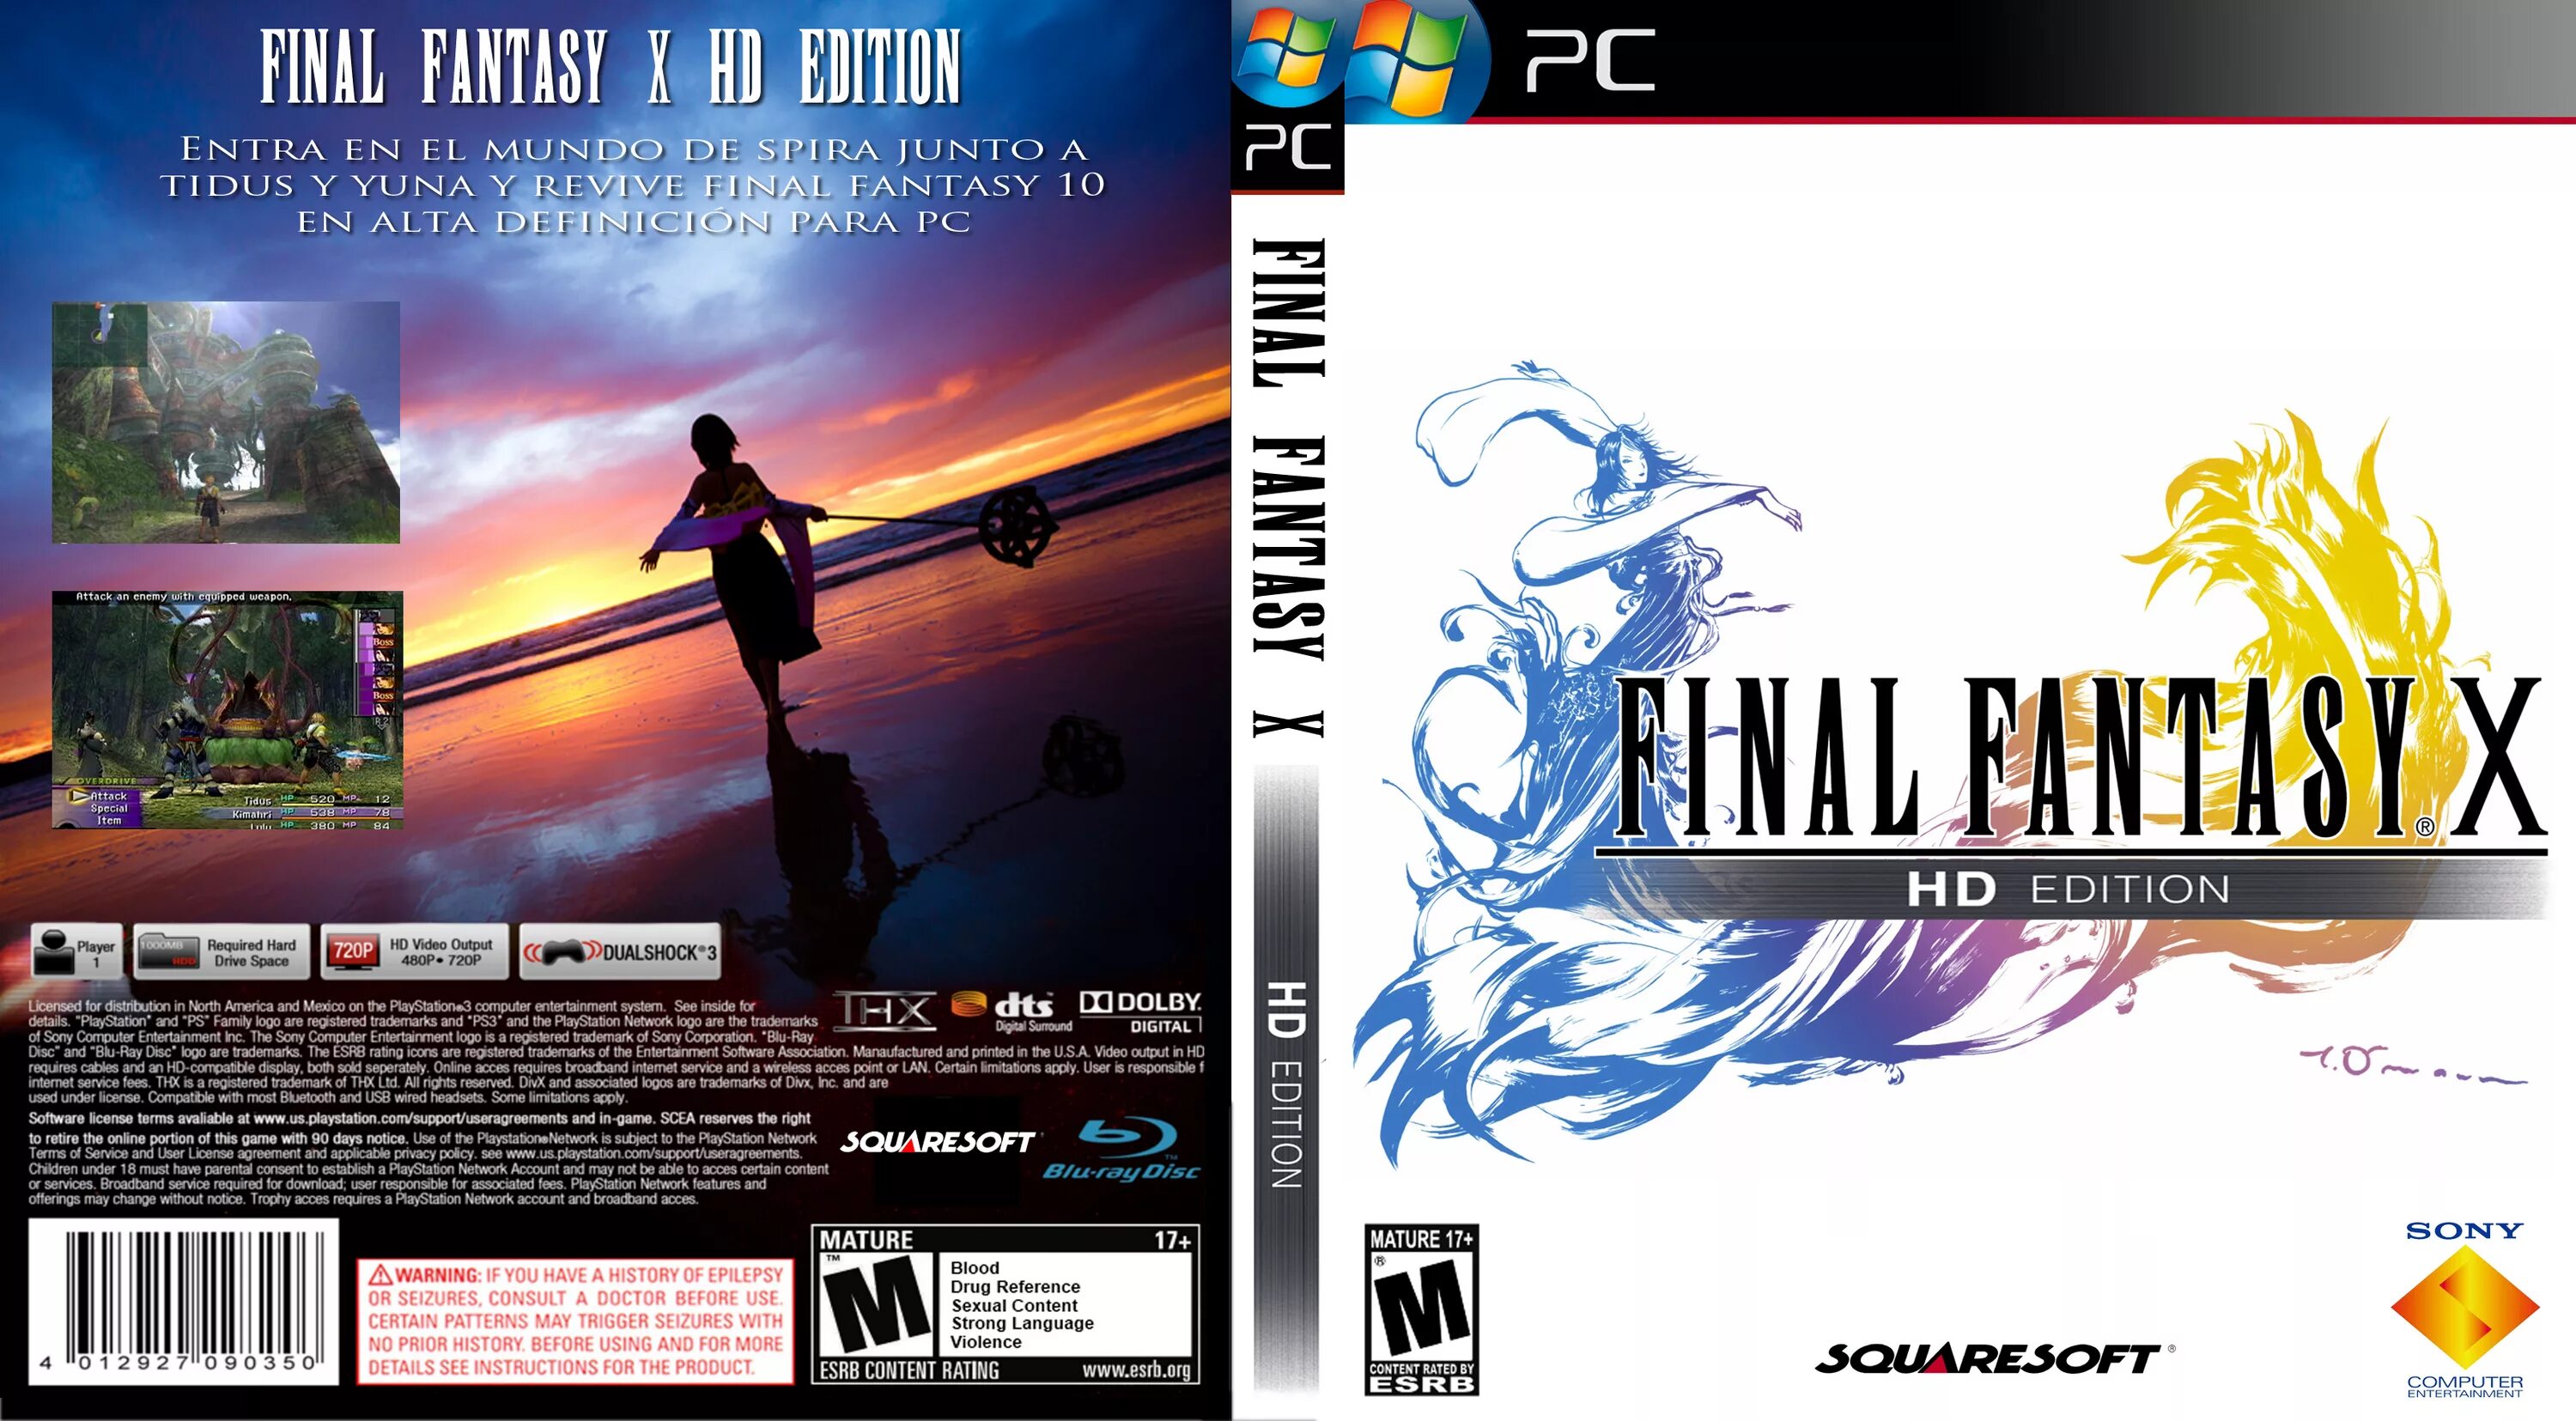 Final Fantasy x ps2 Cover. Final Fantasy ps2. Final Fantasy x обложка. PLAYSTATION 2 игры Final Fantasy 10. Диска final fantasy